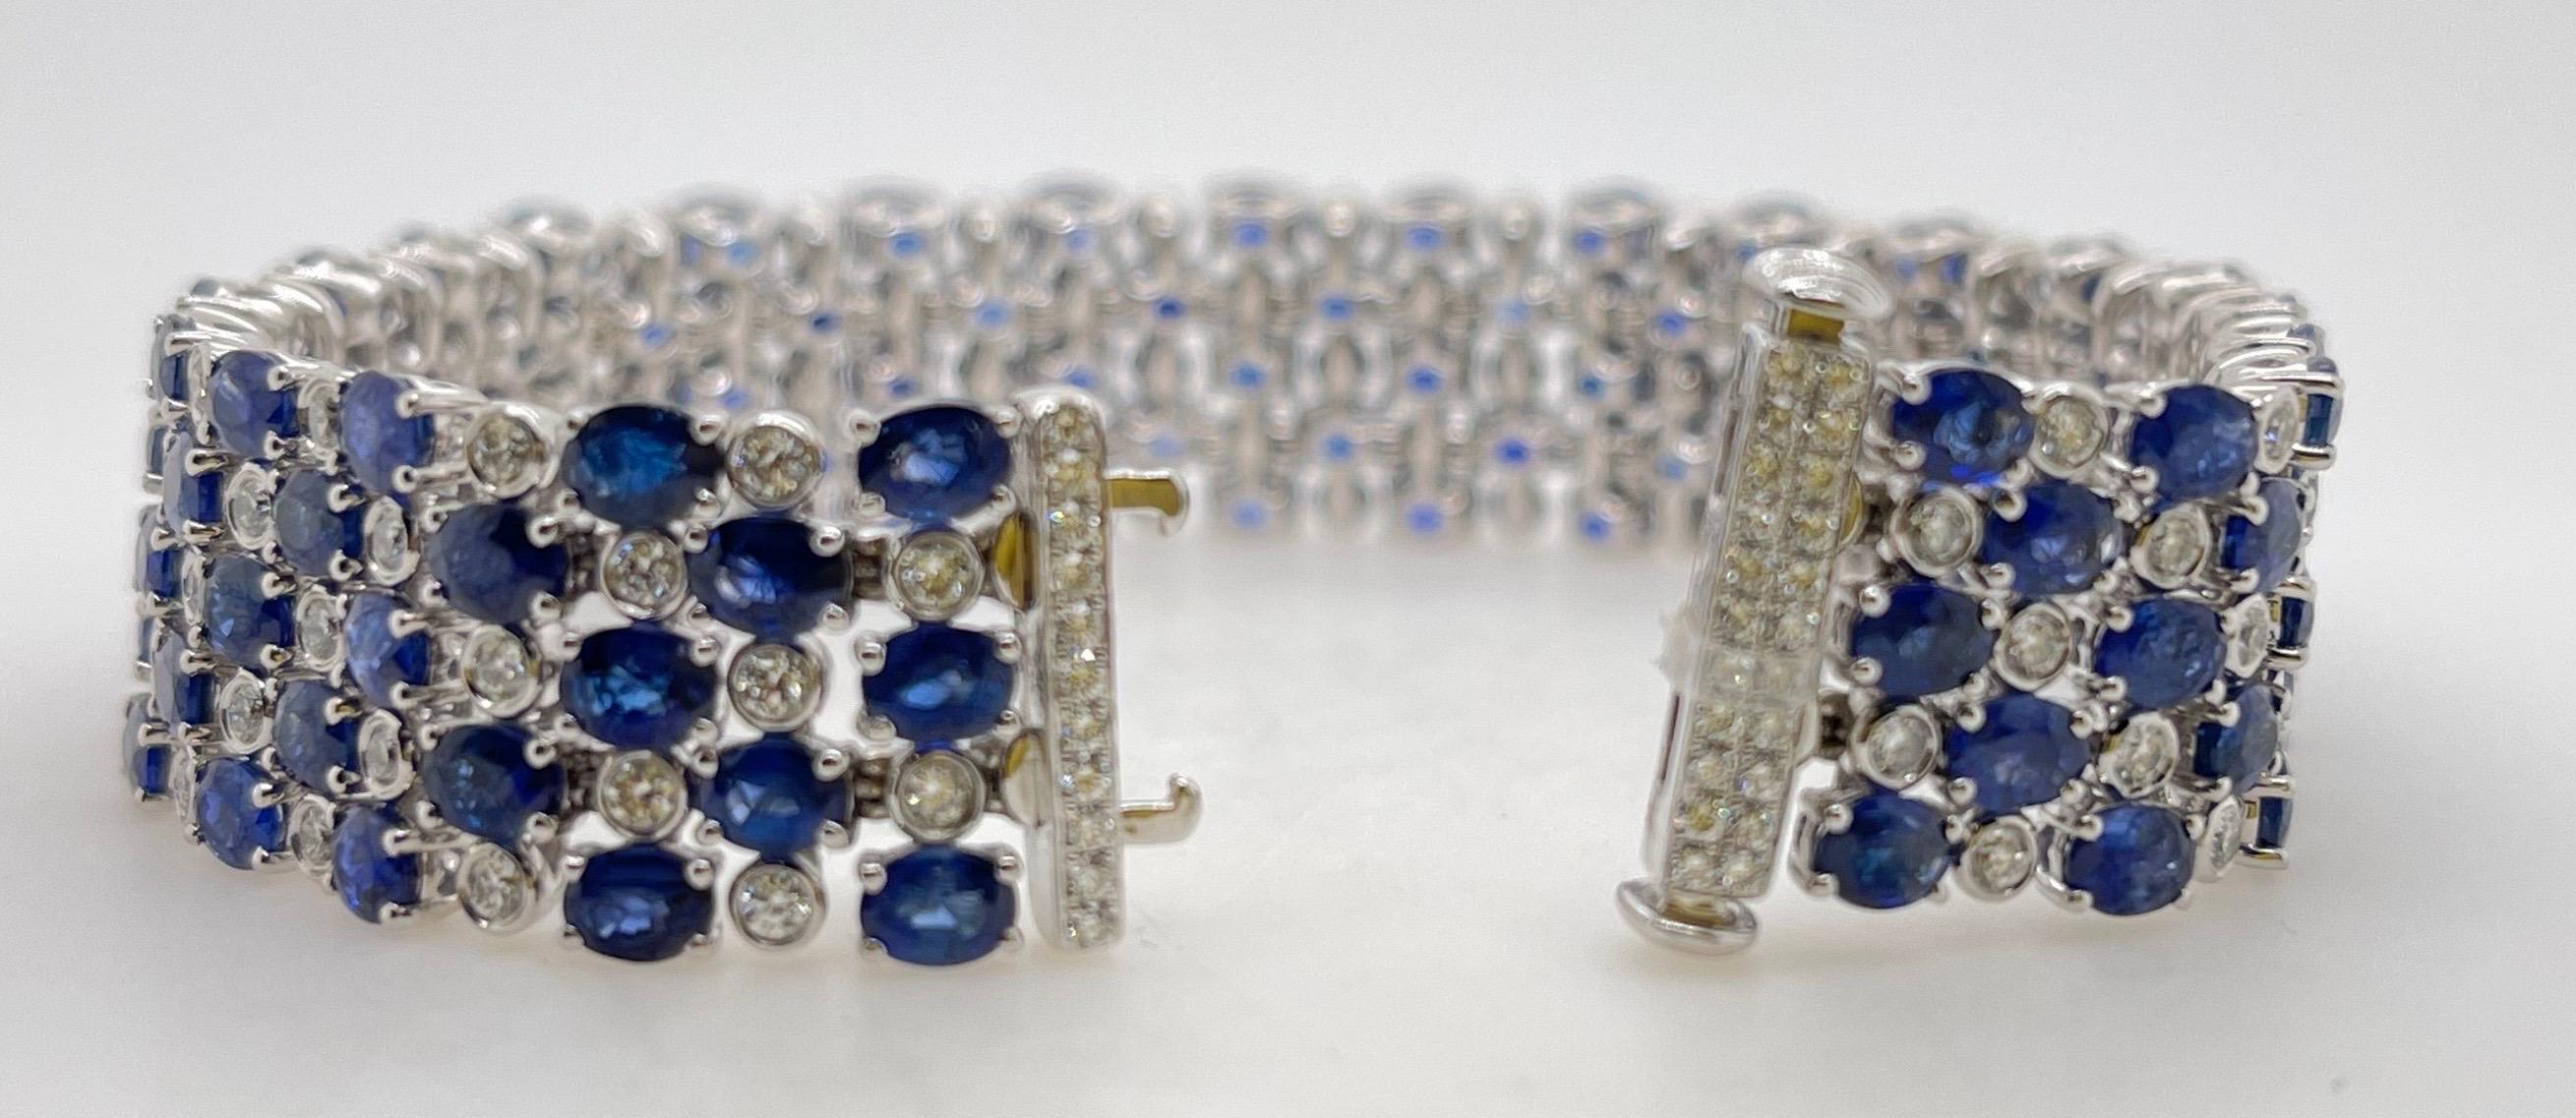 Round Diamond & Sapphire Bracelet 
18kt white gold 
118 sapphires= 26.22ct 
117 diamonds= 2.71ct 